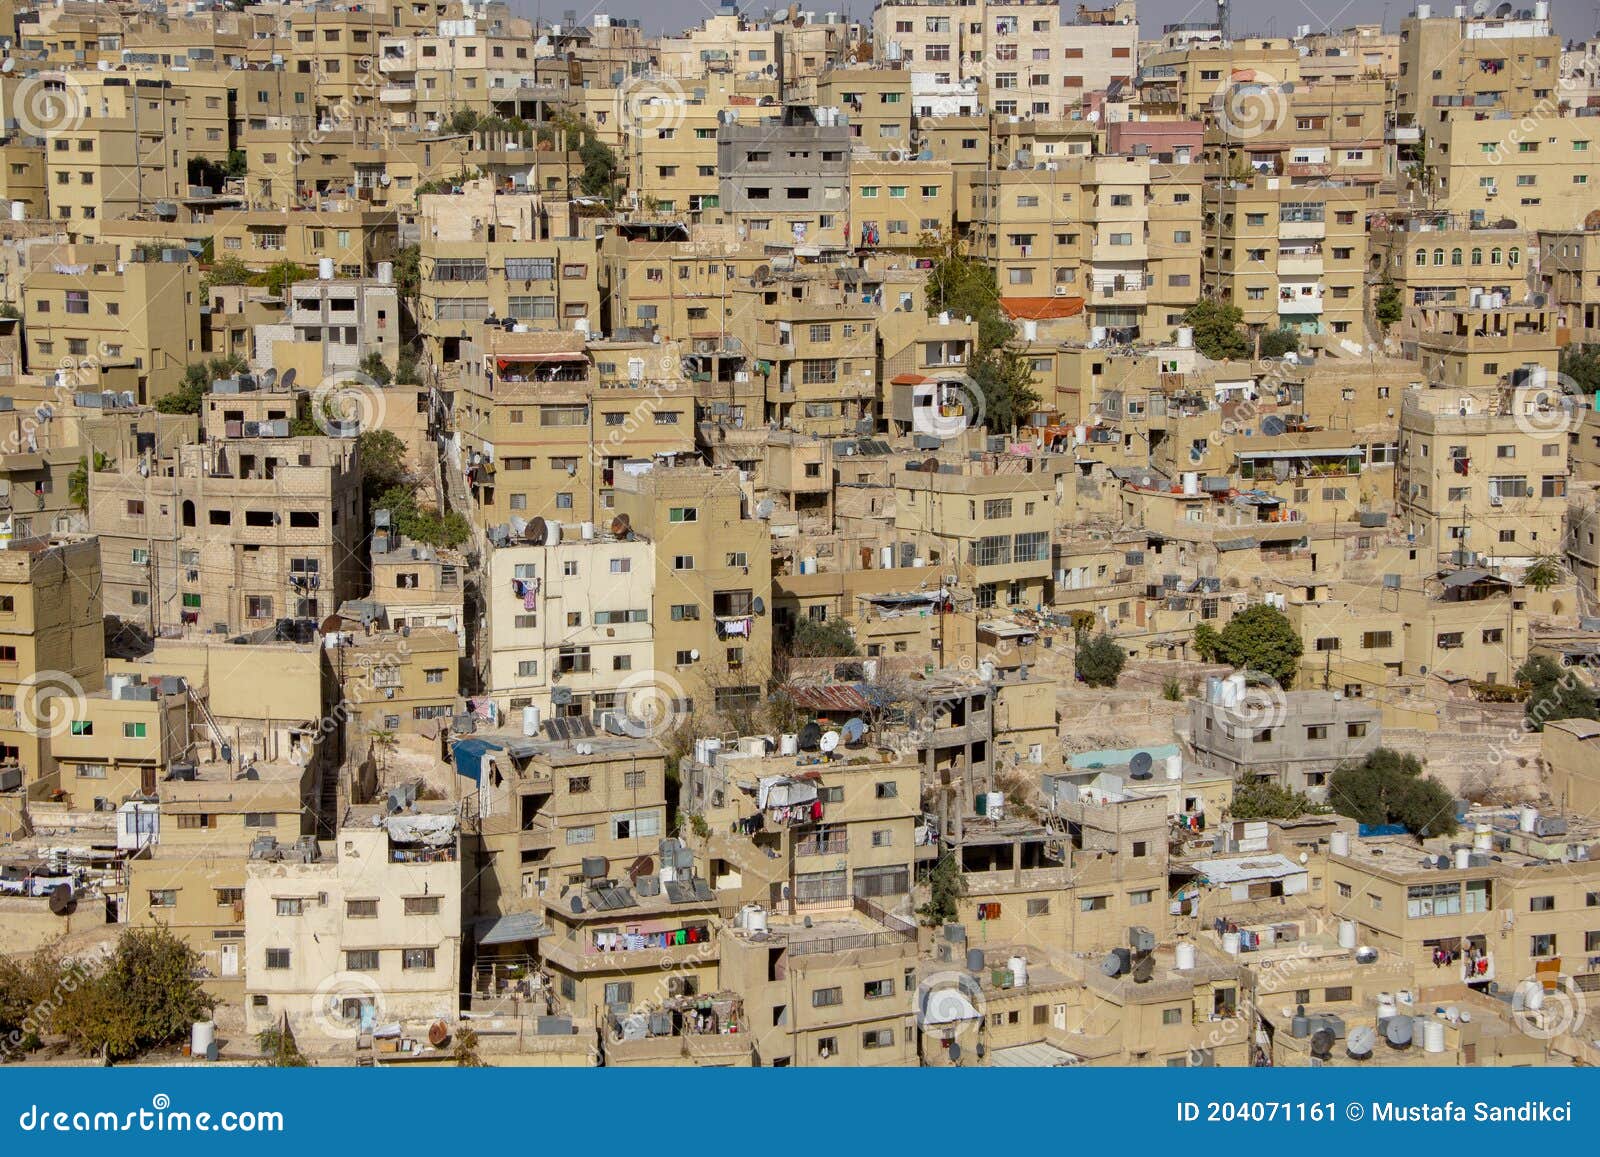 ring Rettelse Alert Amman, Jordan, Middle East City Houses Stock Image - Image of building,  historic: 204071161